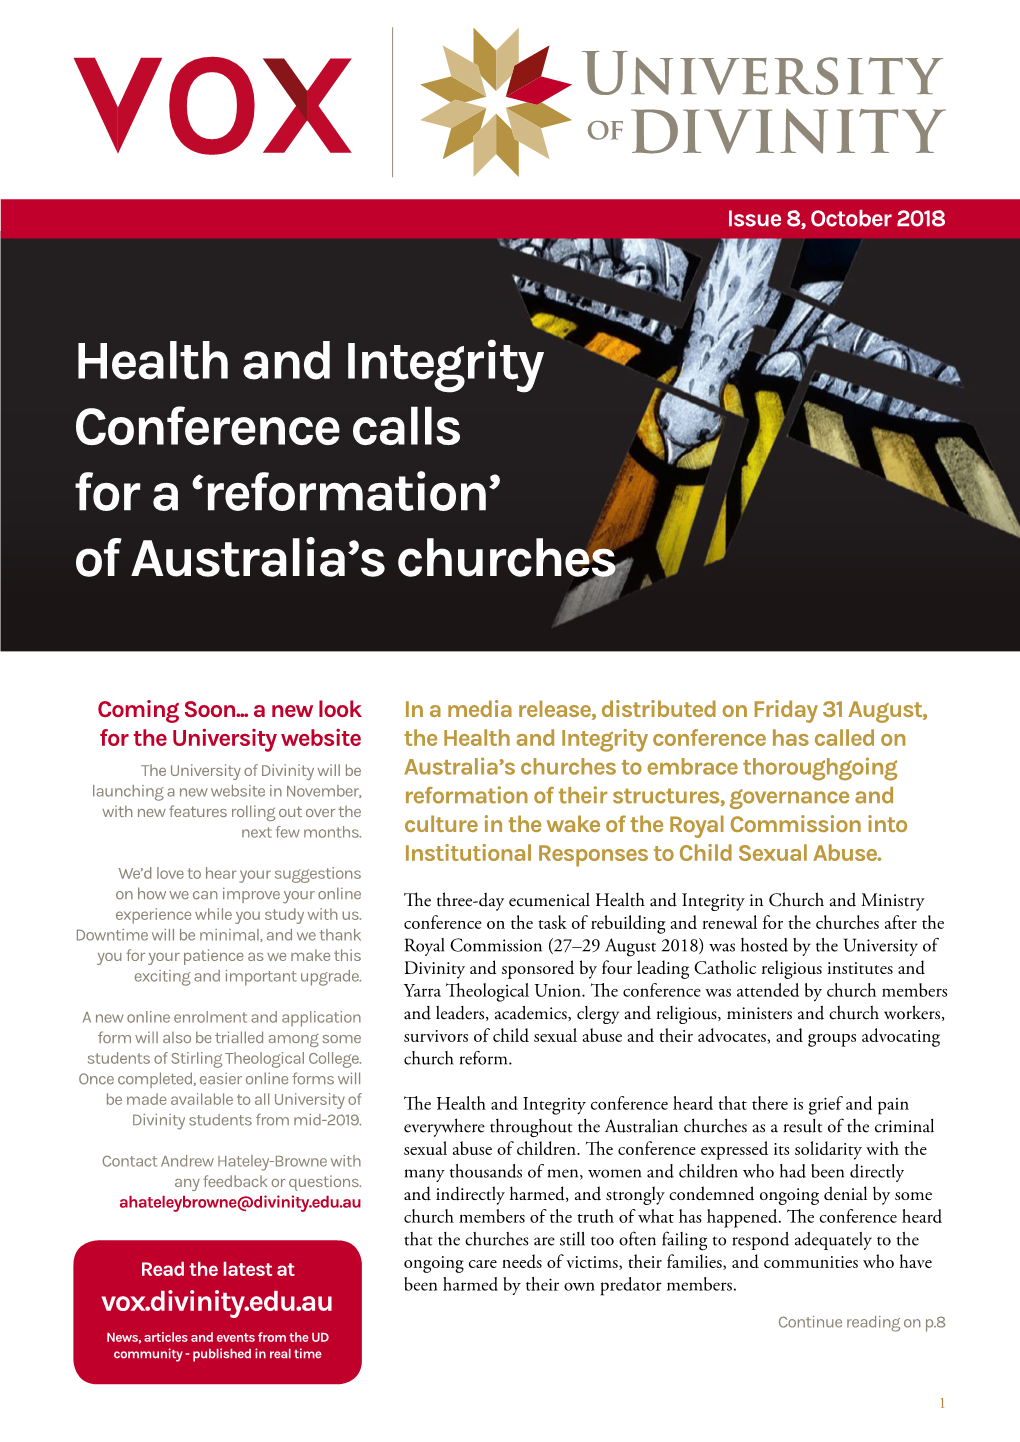 'Reformation' of Australia's Churches